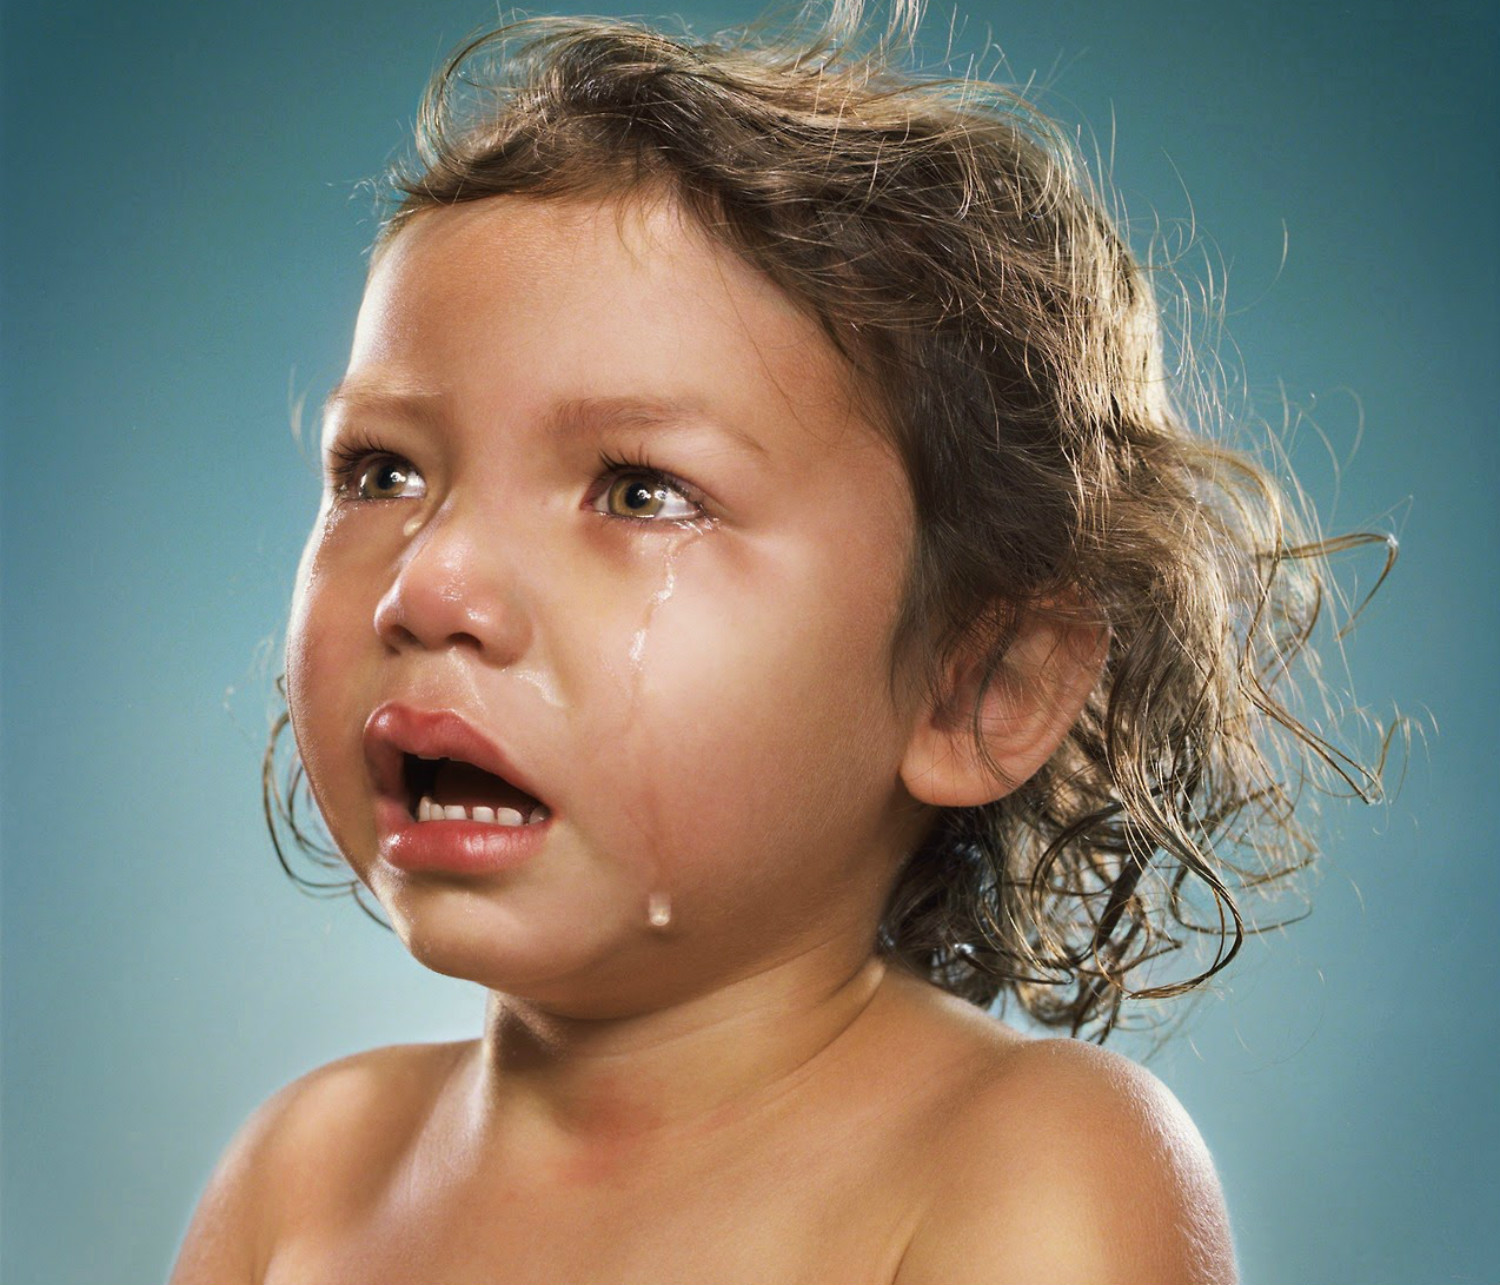 jill greenberg photographer end times crying children